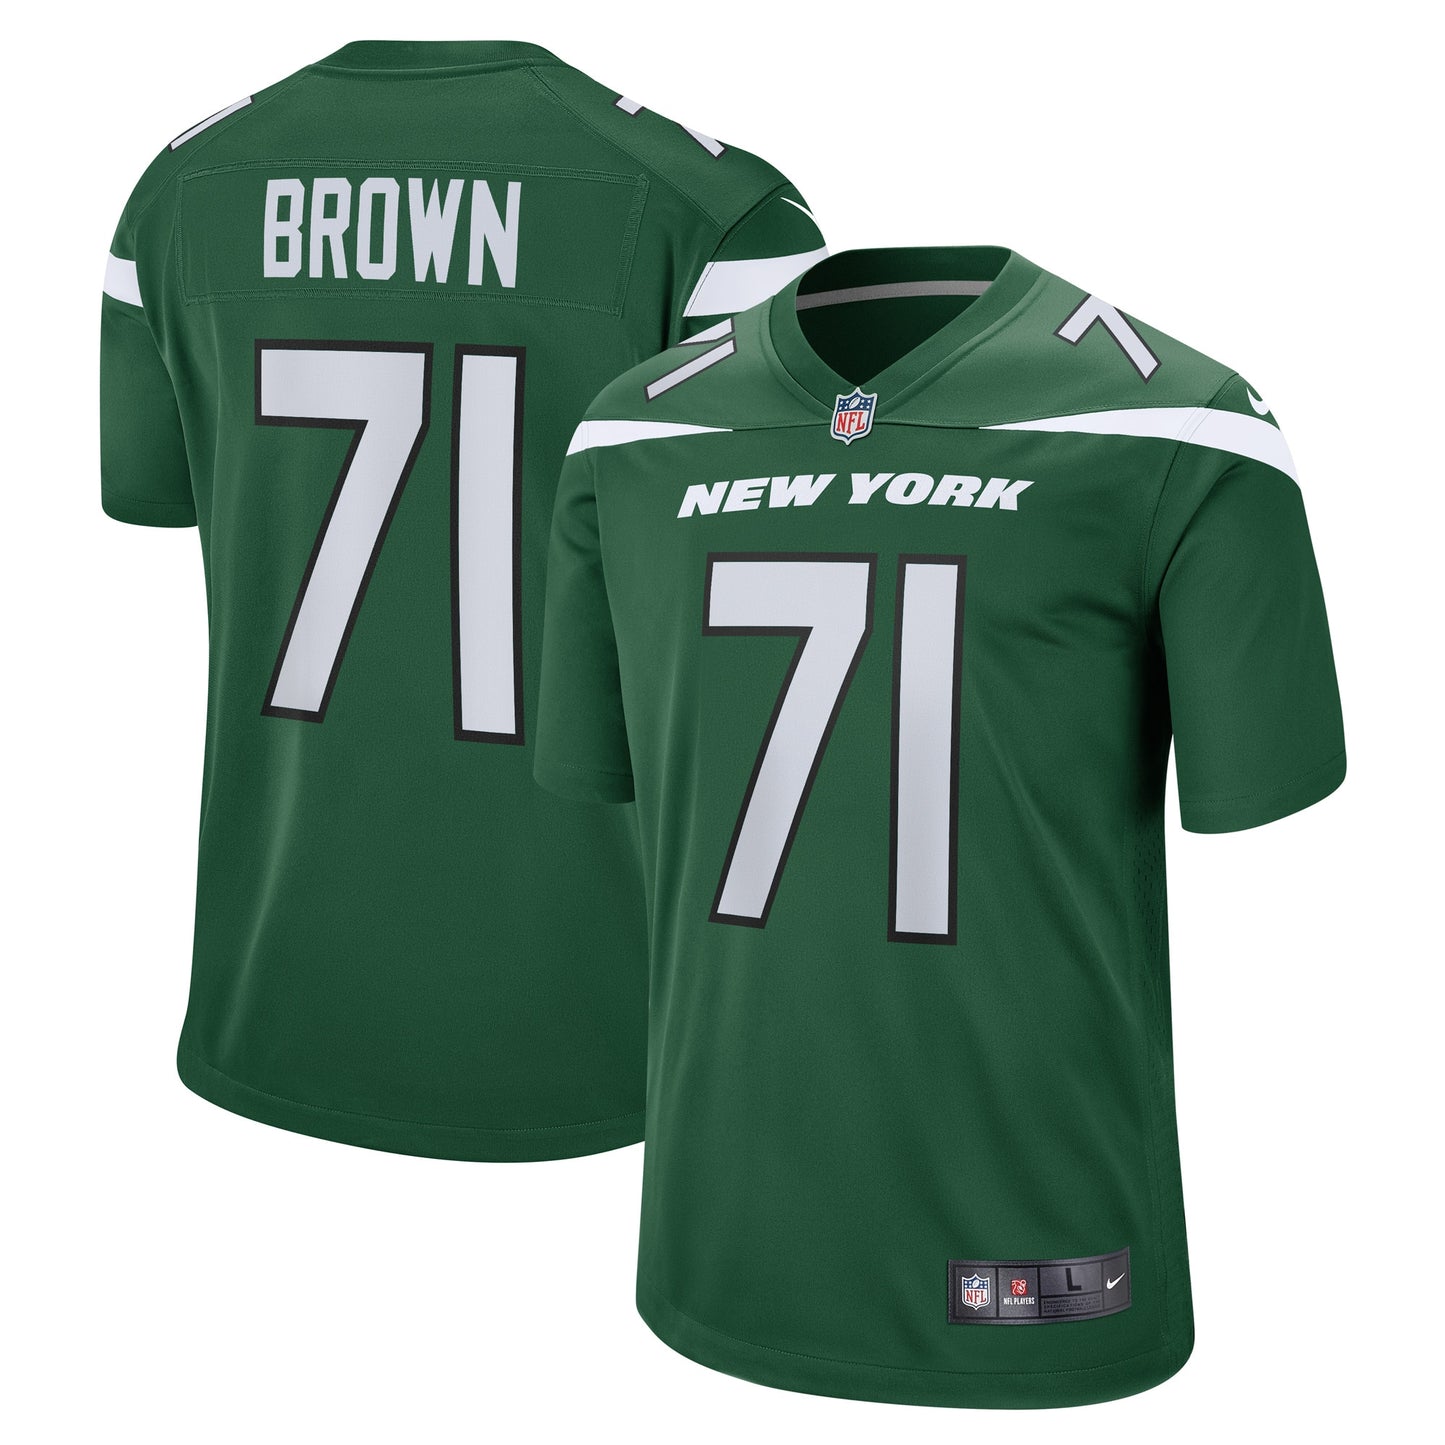 Duane Brown New York Jets Nike Game Player Jersey - Gotham Green